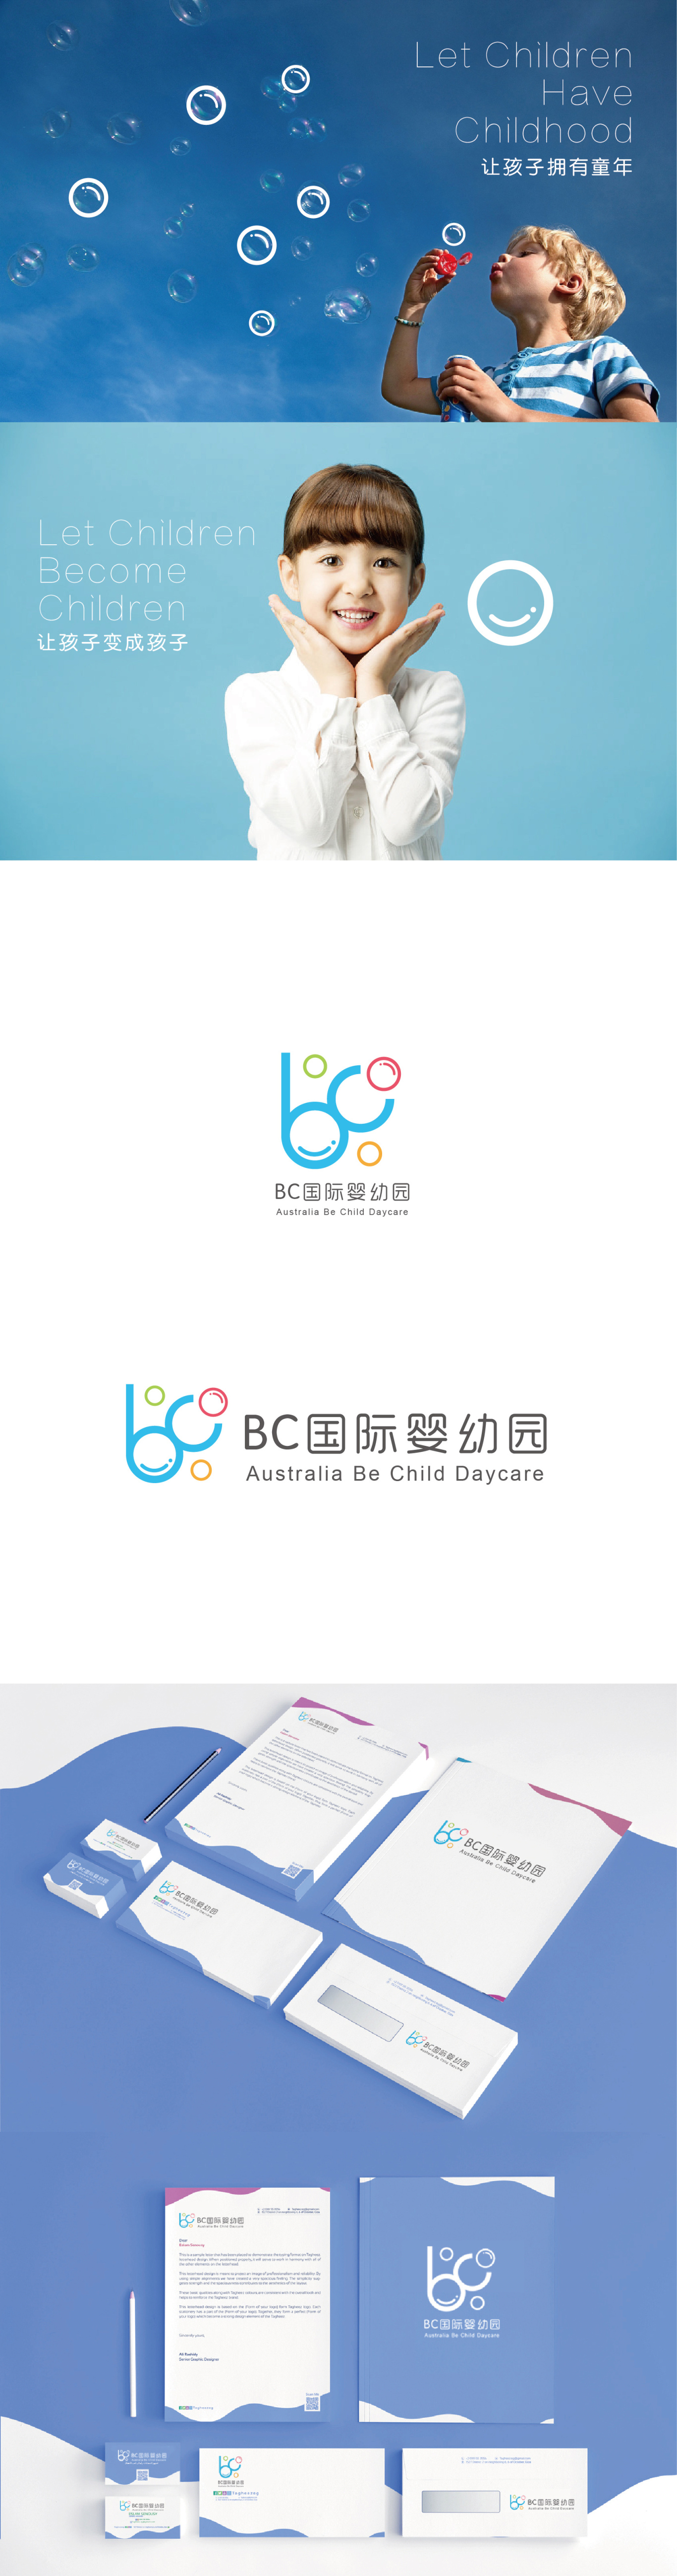 BC國際嬰幼園LOGO設計圖1